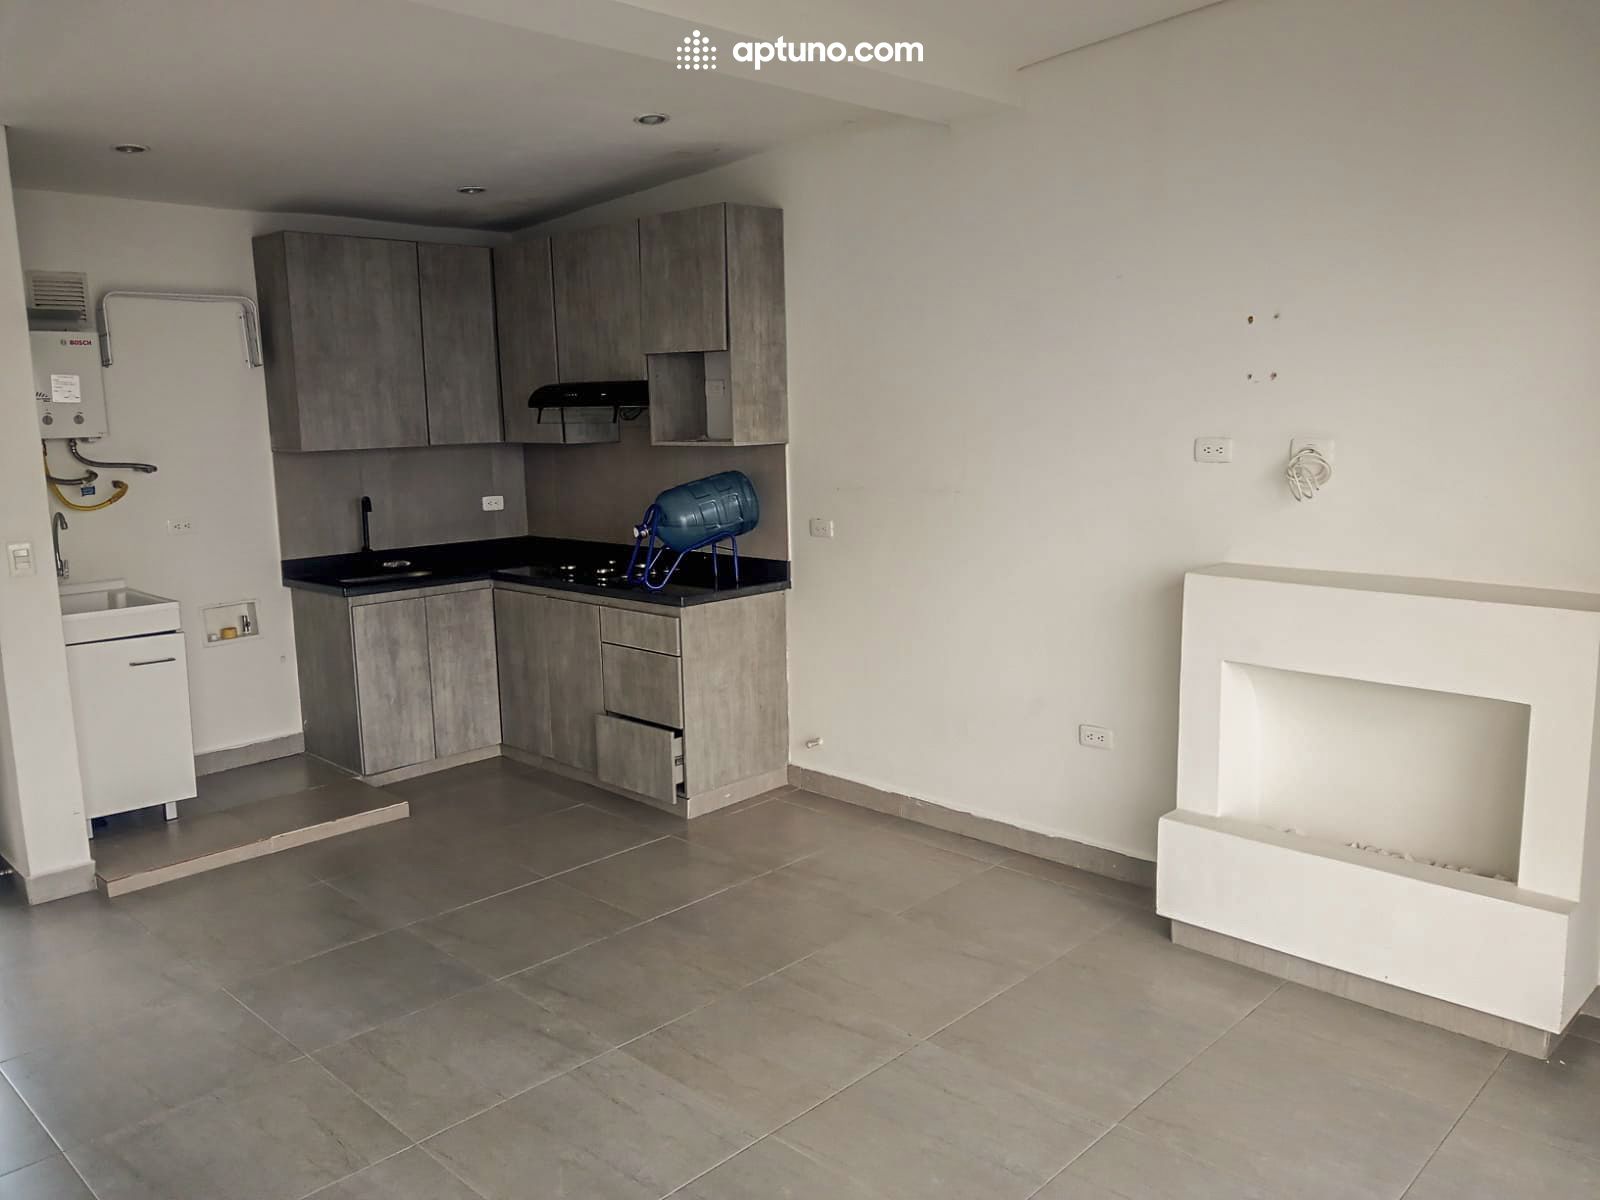 Apartamento en arriendo Altavista 85 m² - $ 1.400.000,00